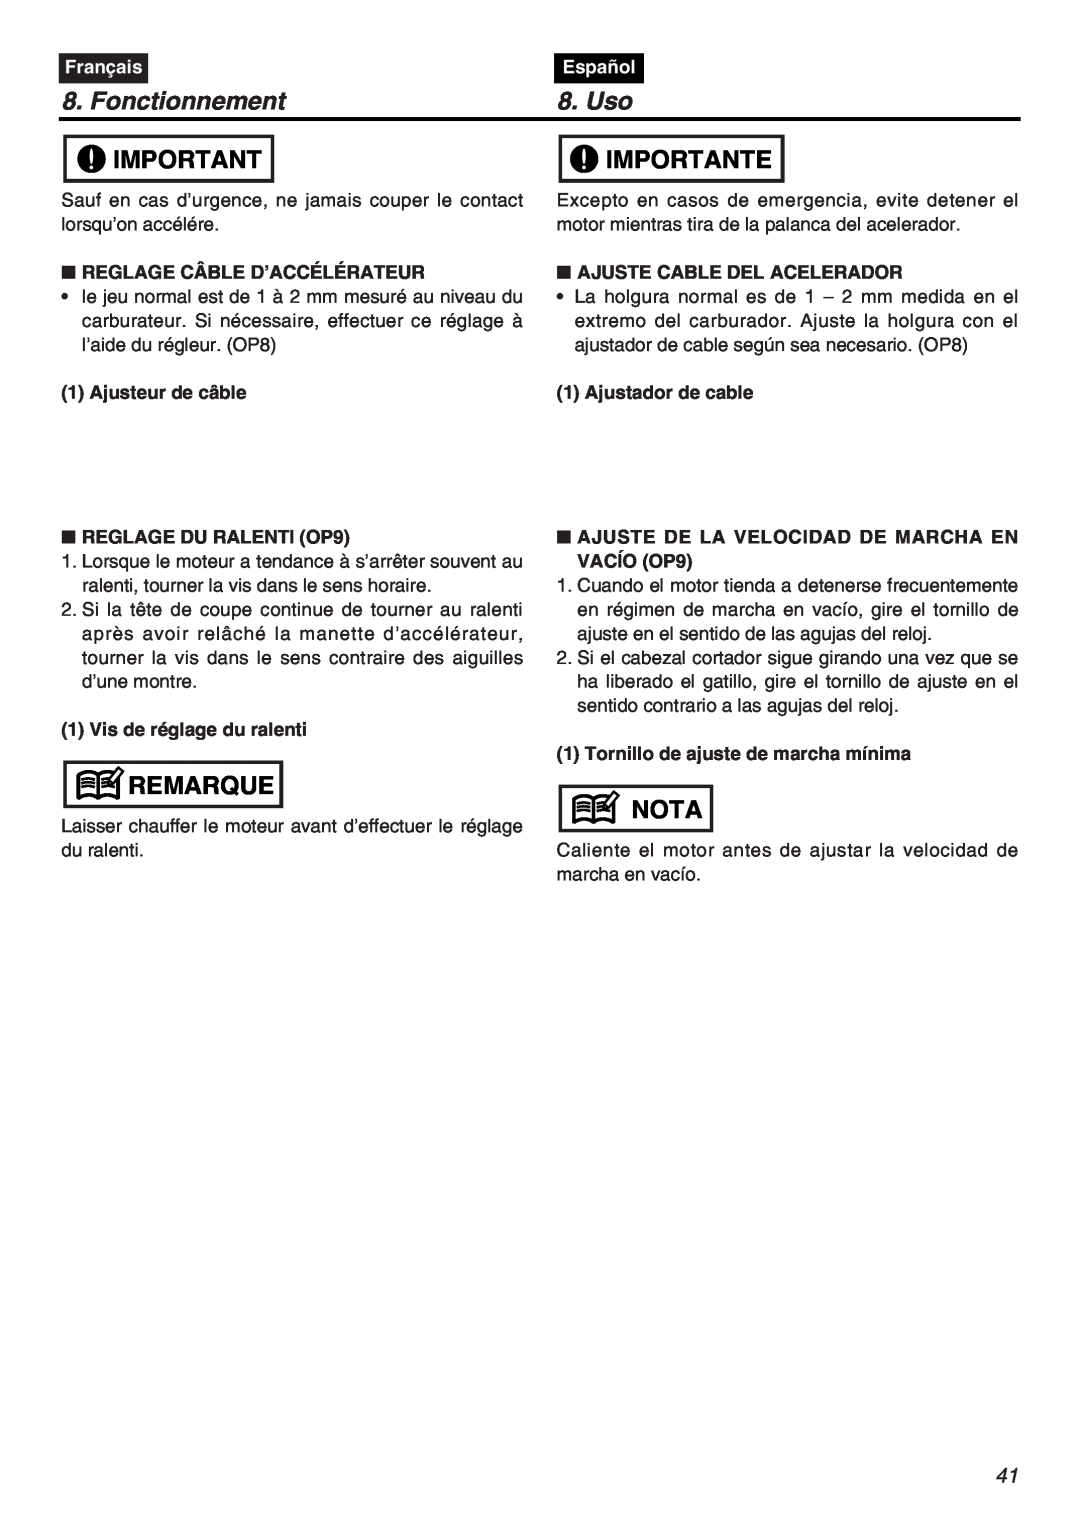 RedMax EXZ2401S-PH-CA manual Fonctionnement, Uso, Importante, Remarque, Nota, Français, Español 